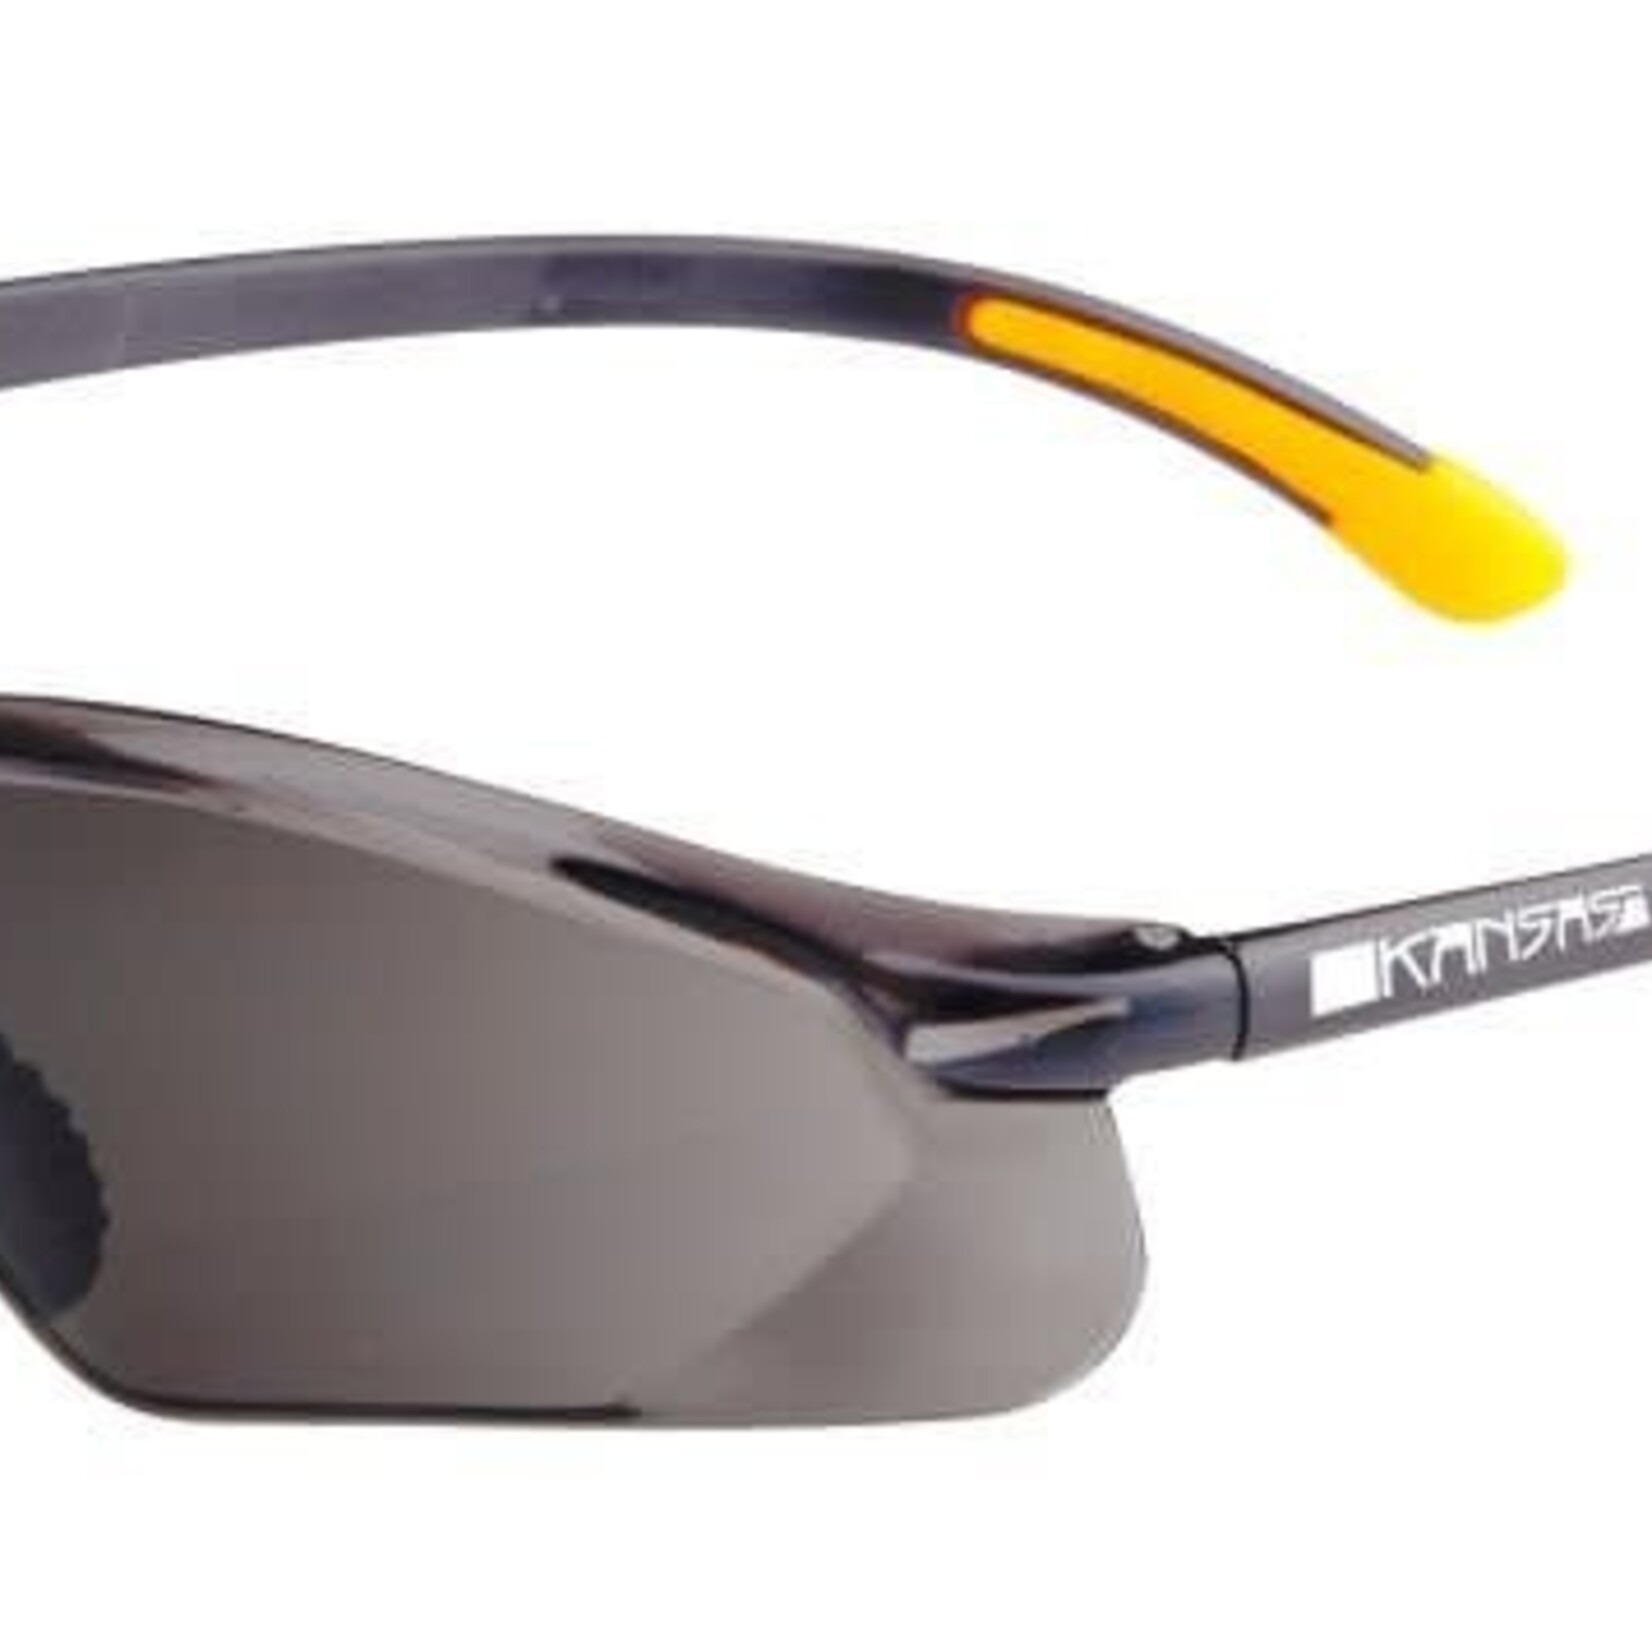 MaxiSafe KANSAS Safety Glasses with Anti-Fog - Smoke Lens